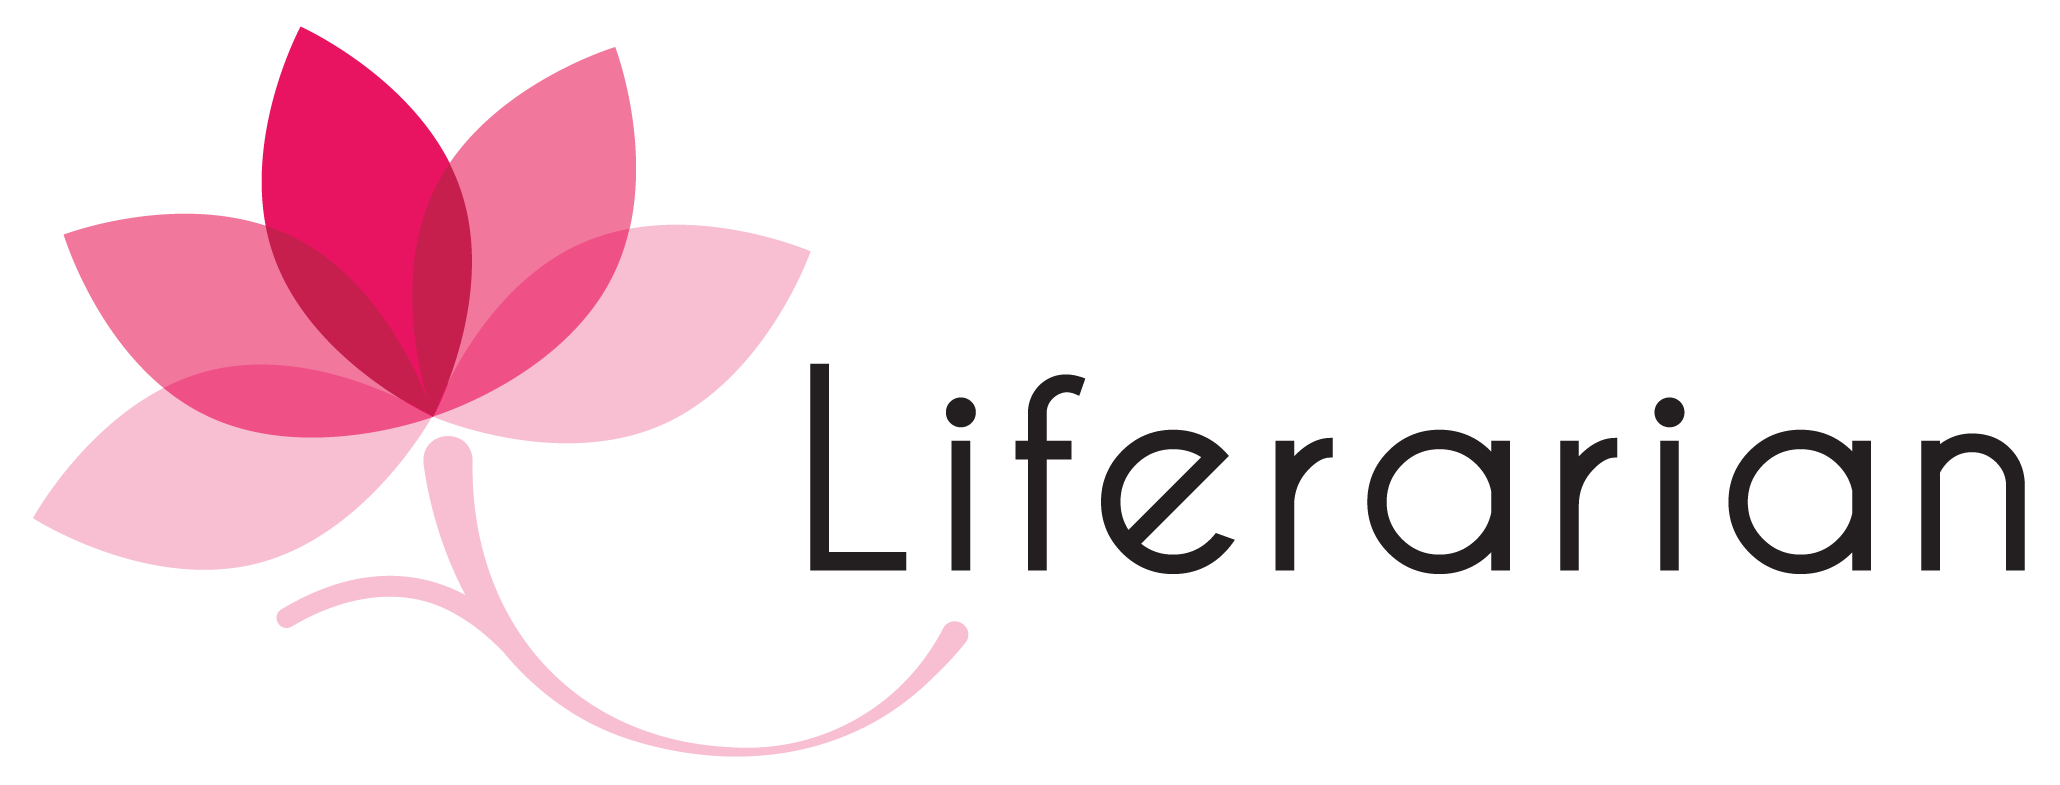 Liferarian Association